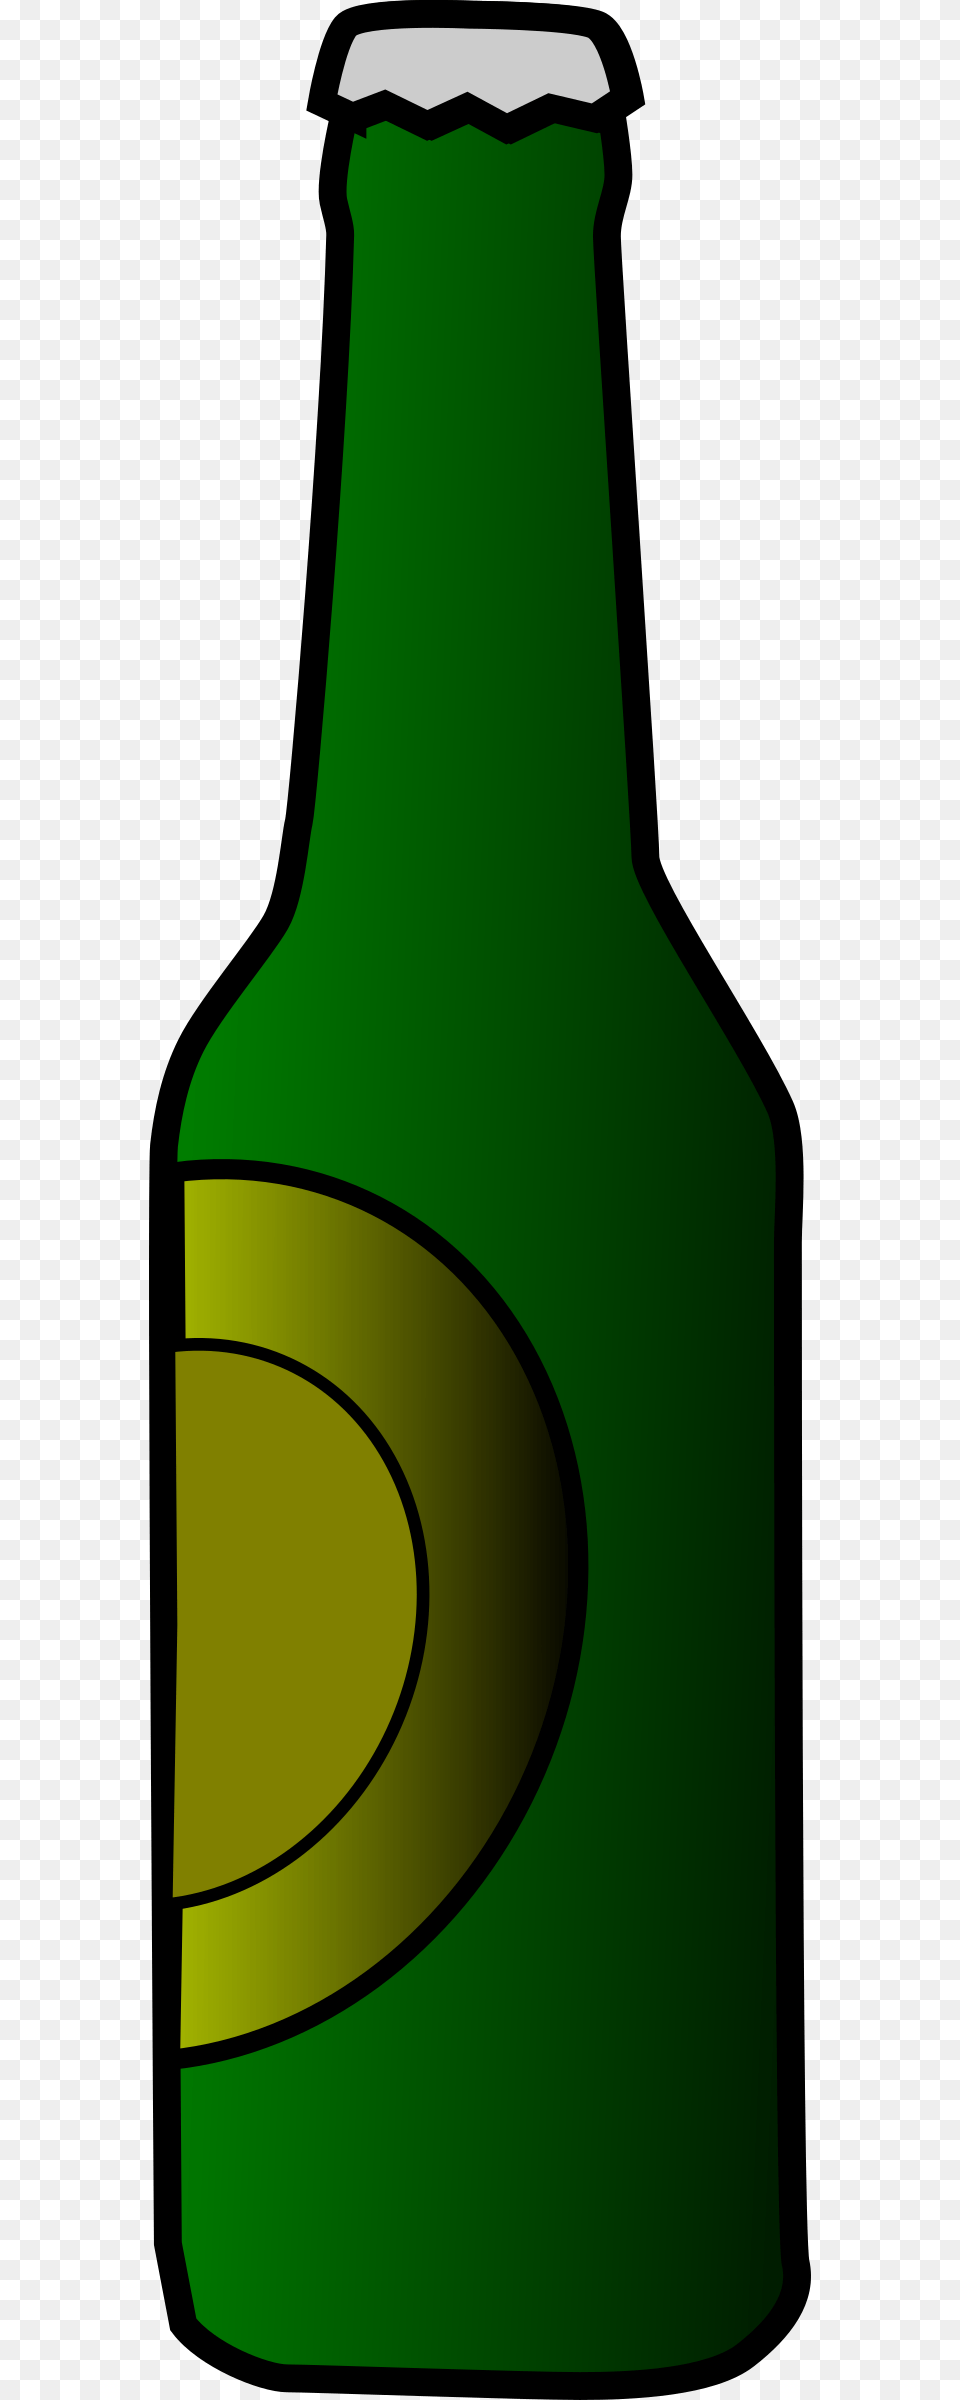 This Icons Design Of Beer Bottle, Alcohol, Beer Bottle, Beverage, Liquor Png Image